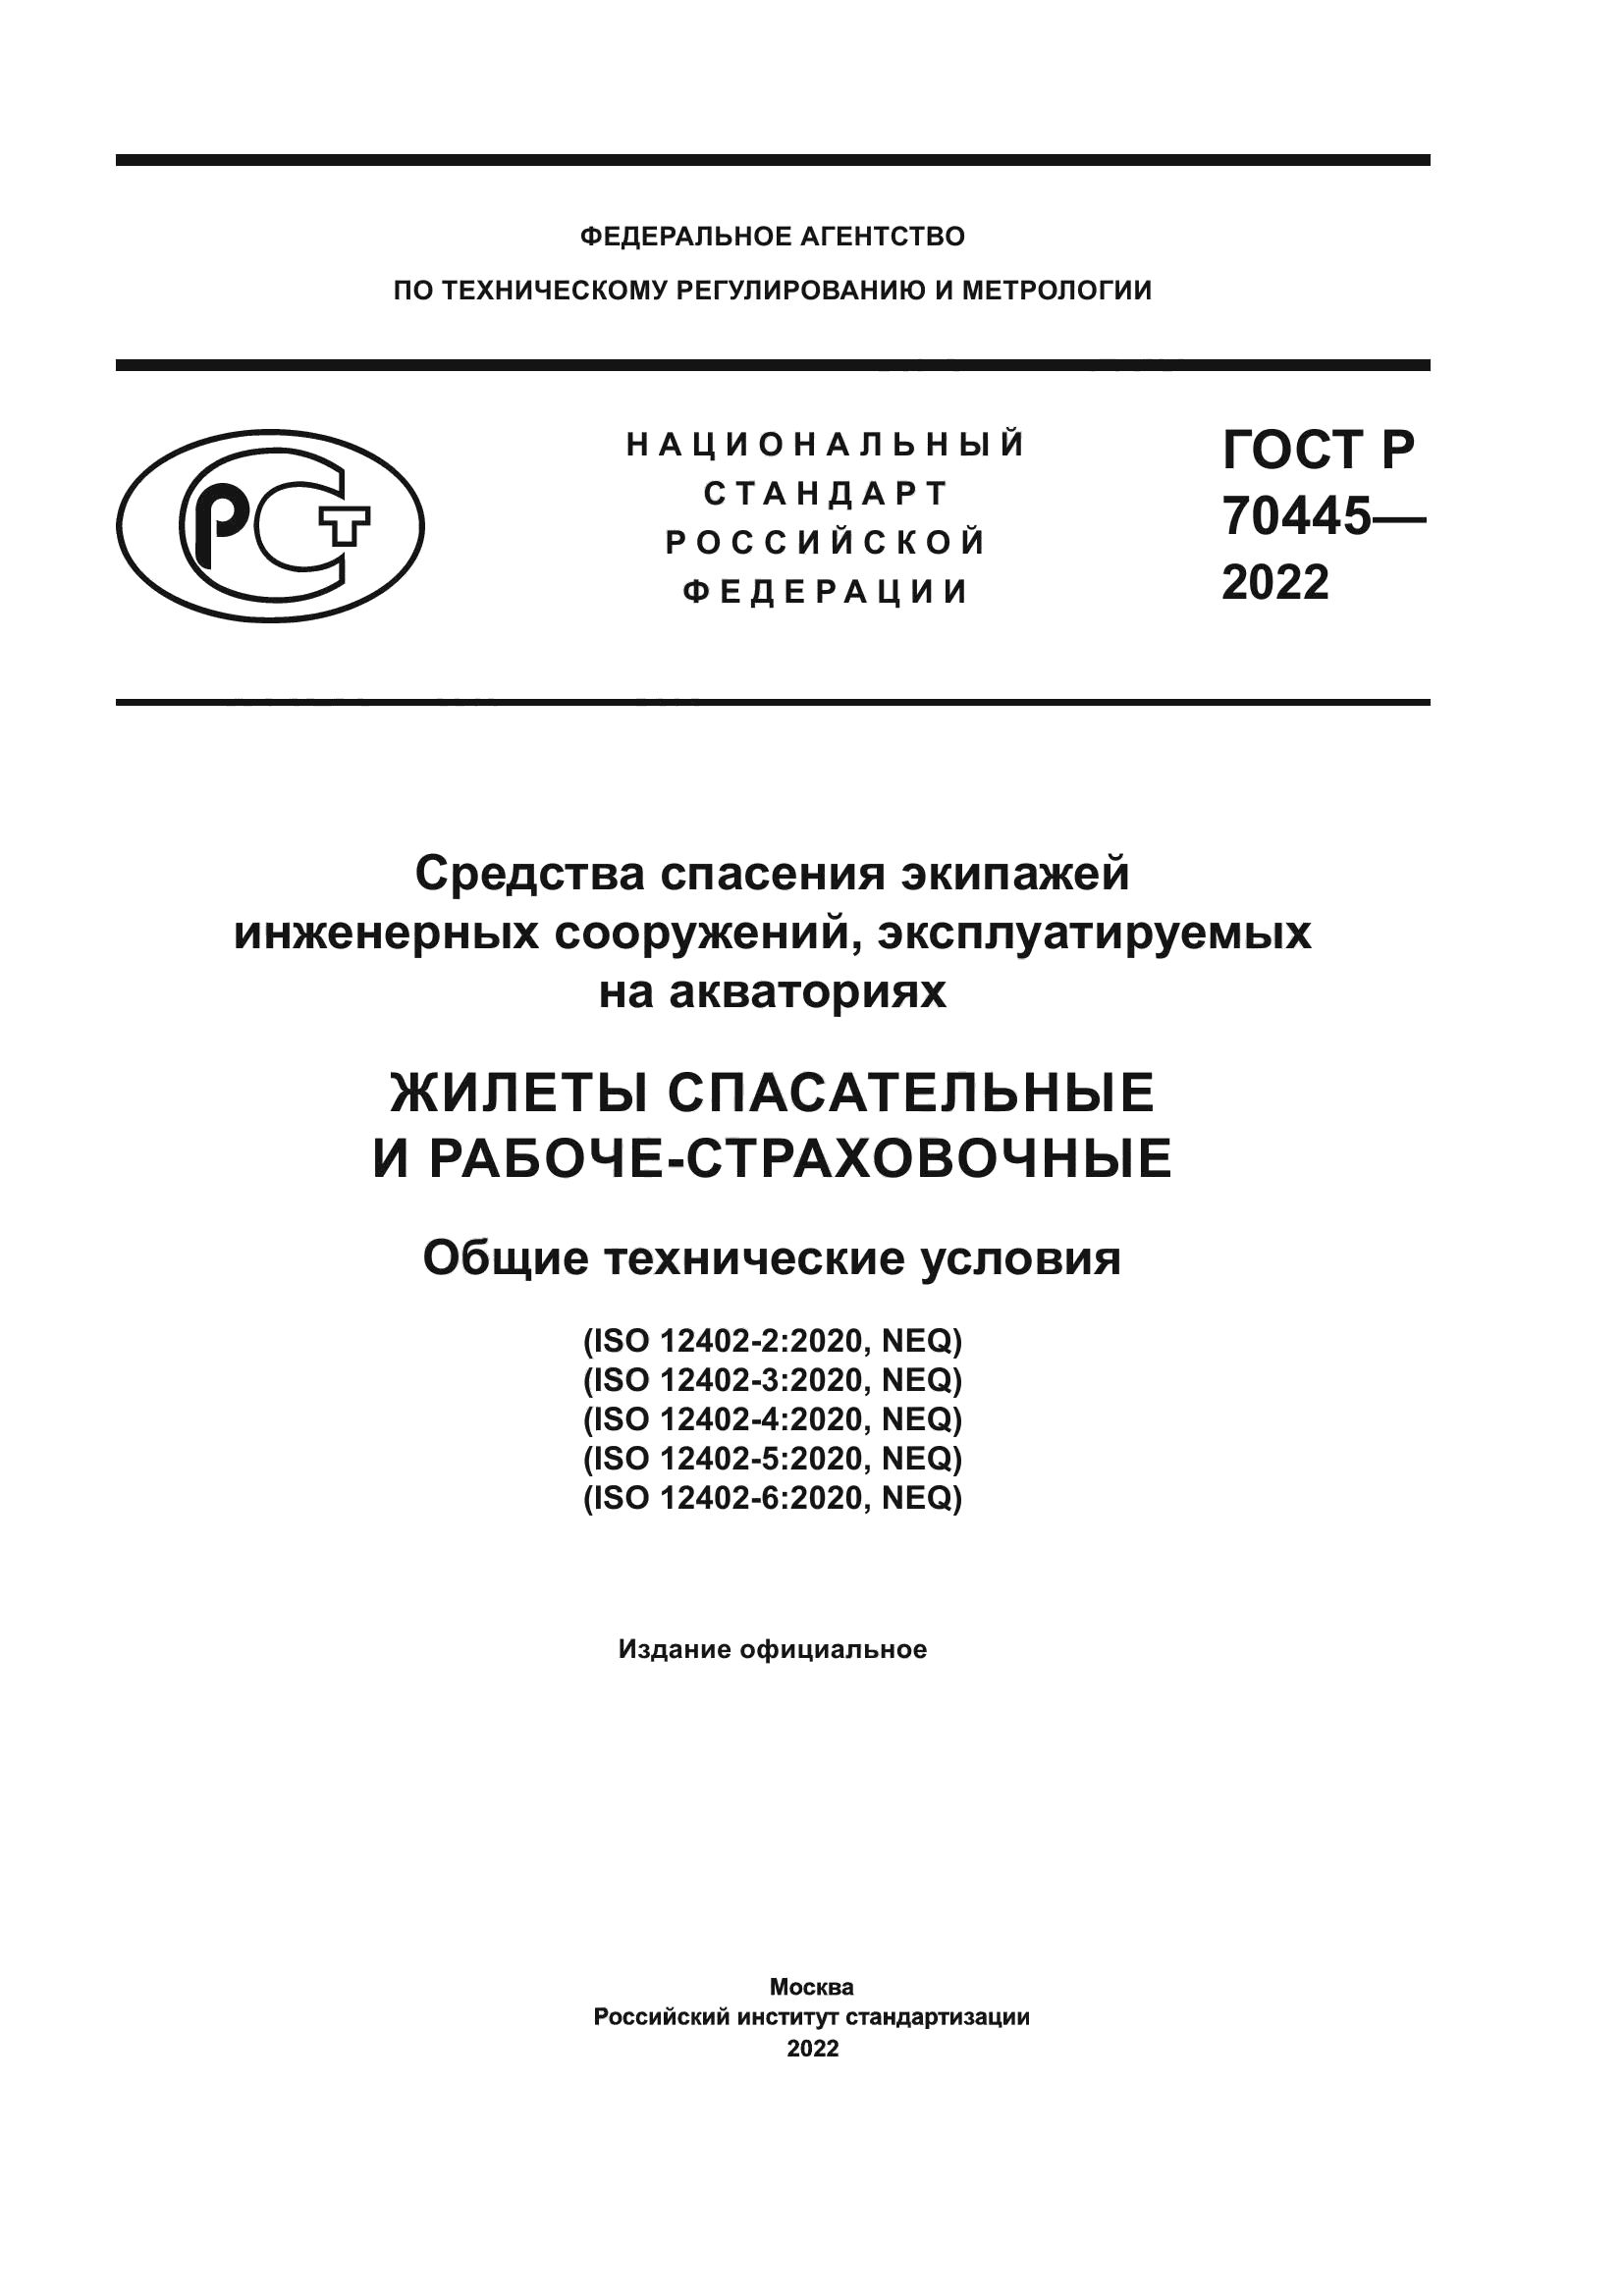 ГОСТ Р 70445-2022